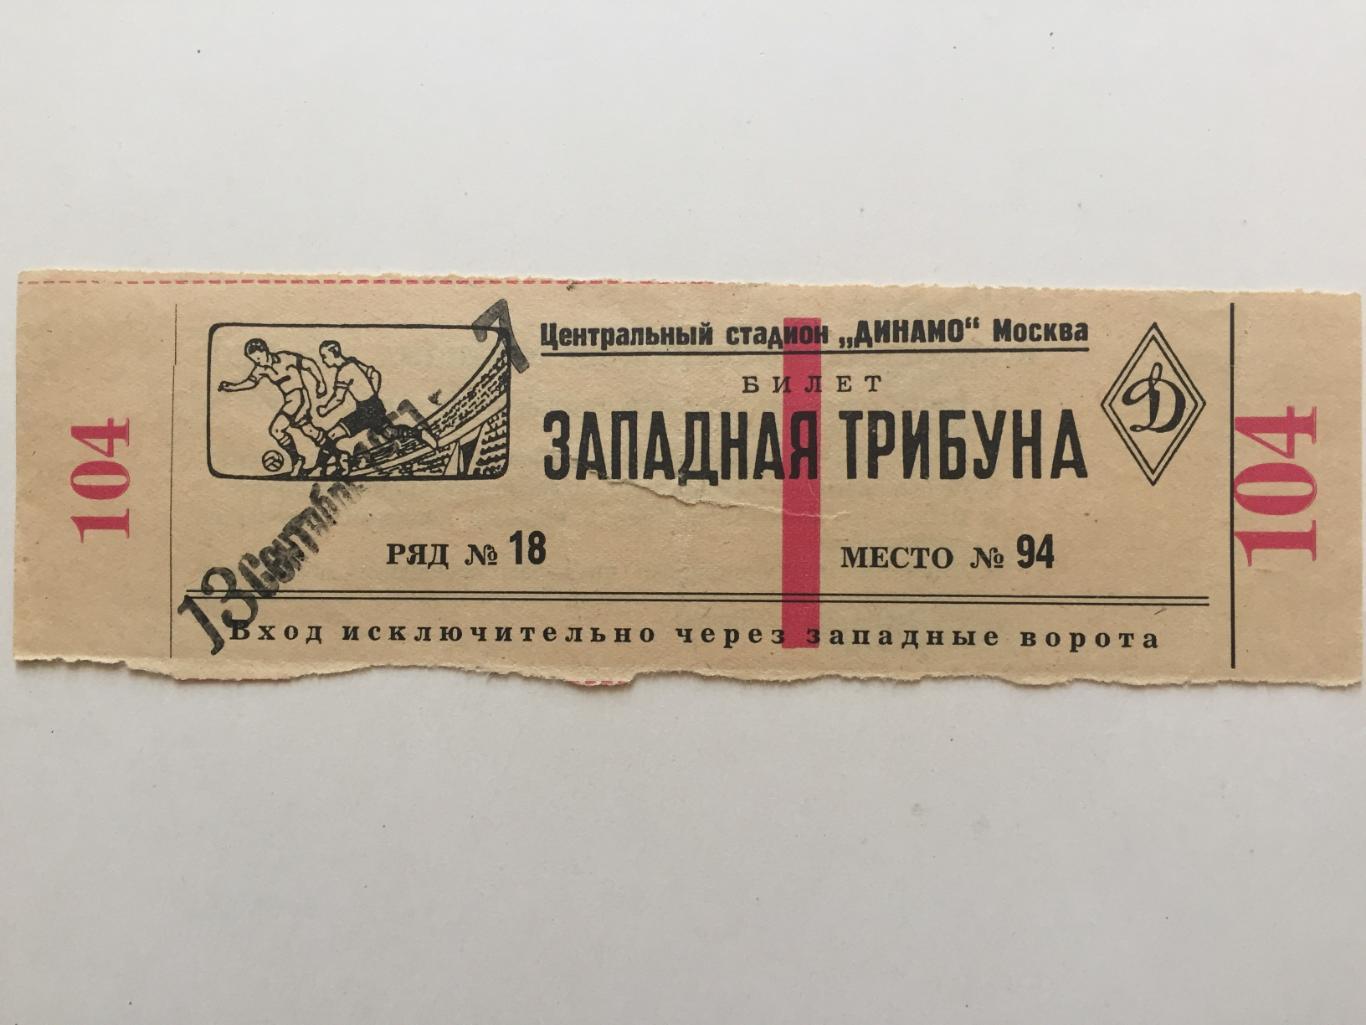 Спартак Москва - Зенит Ленинград 13.09.1951